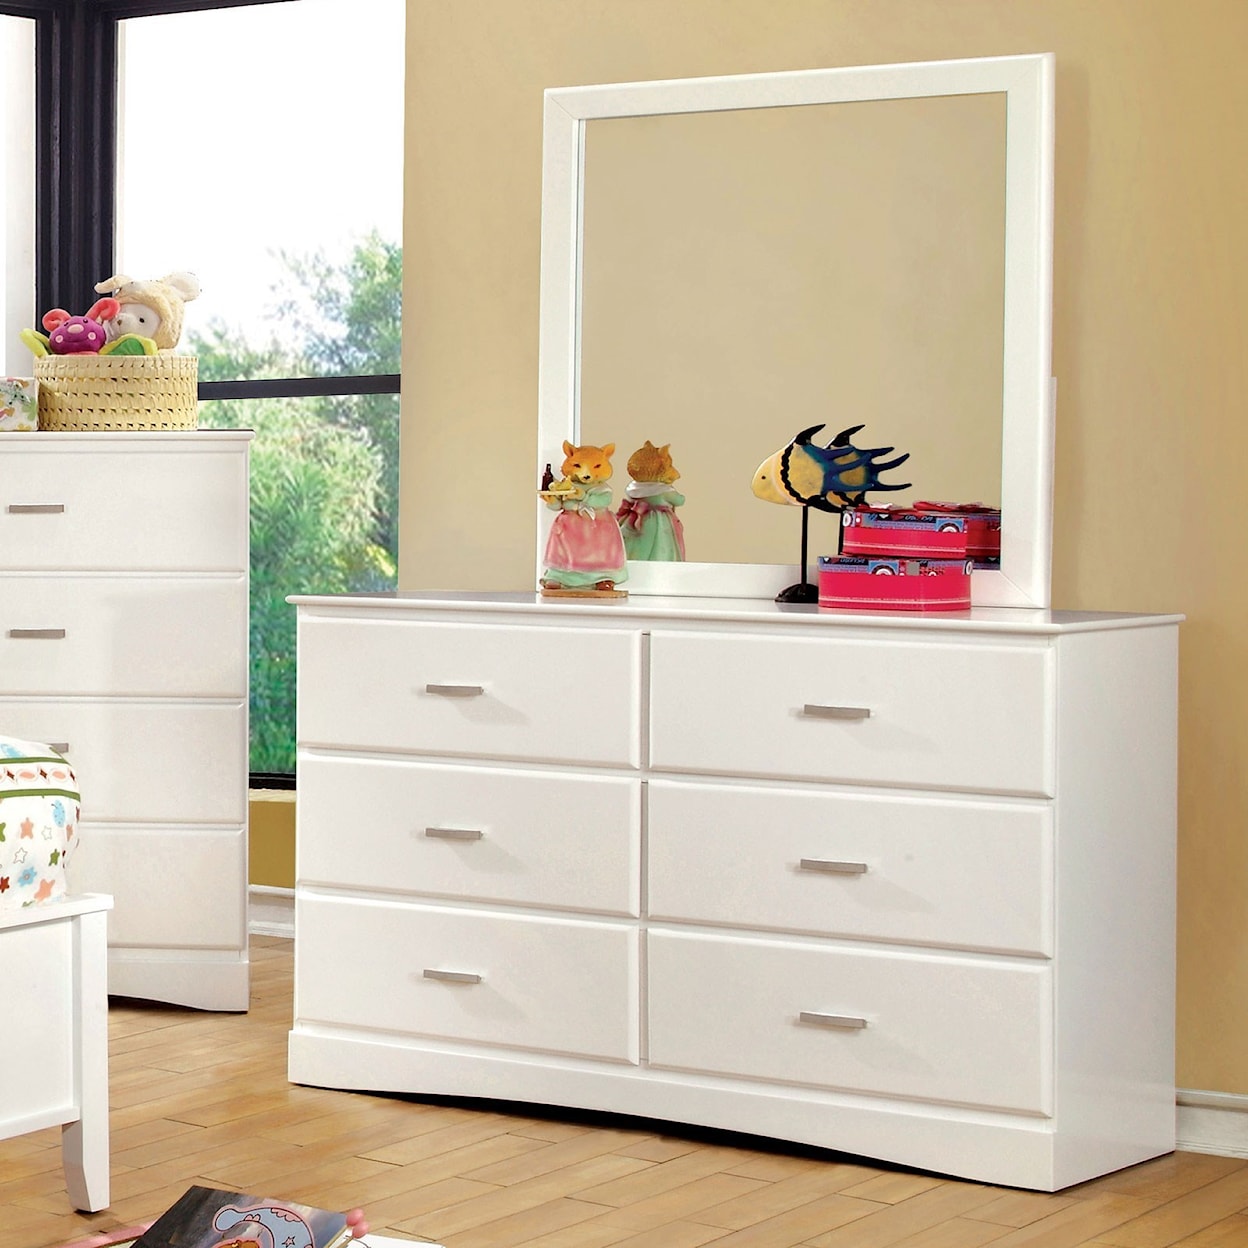 Furniture of America Prismo Dresser and Mirror Combo